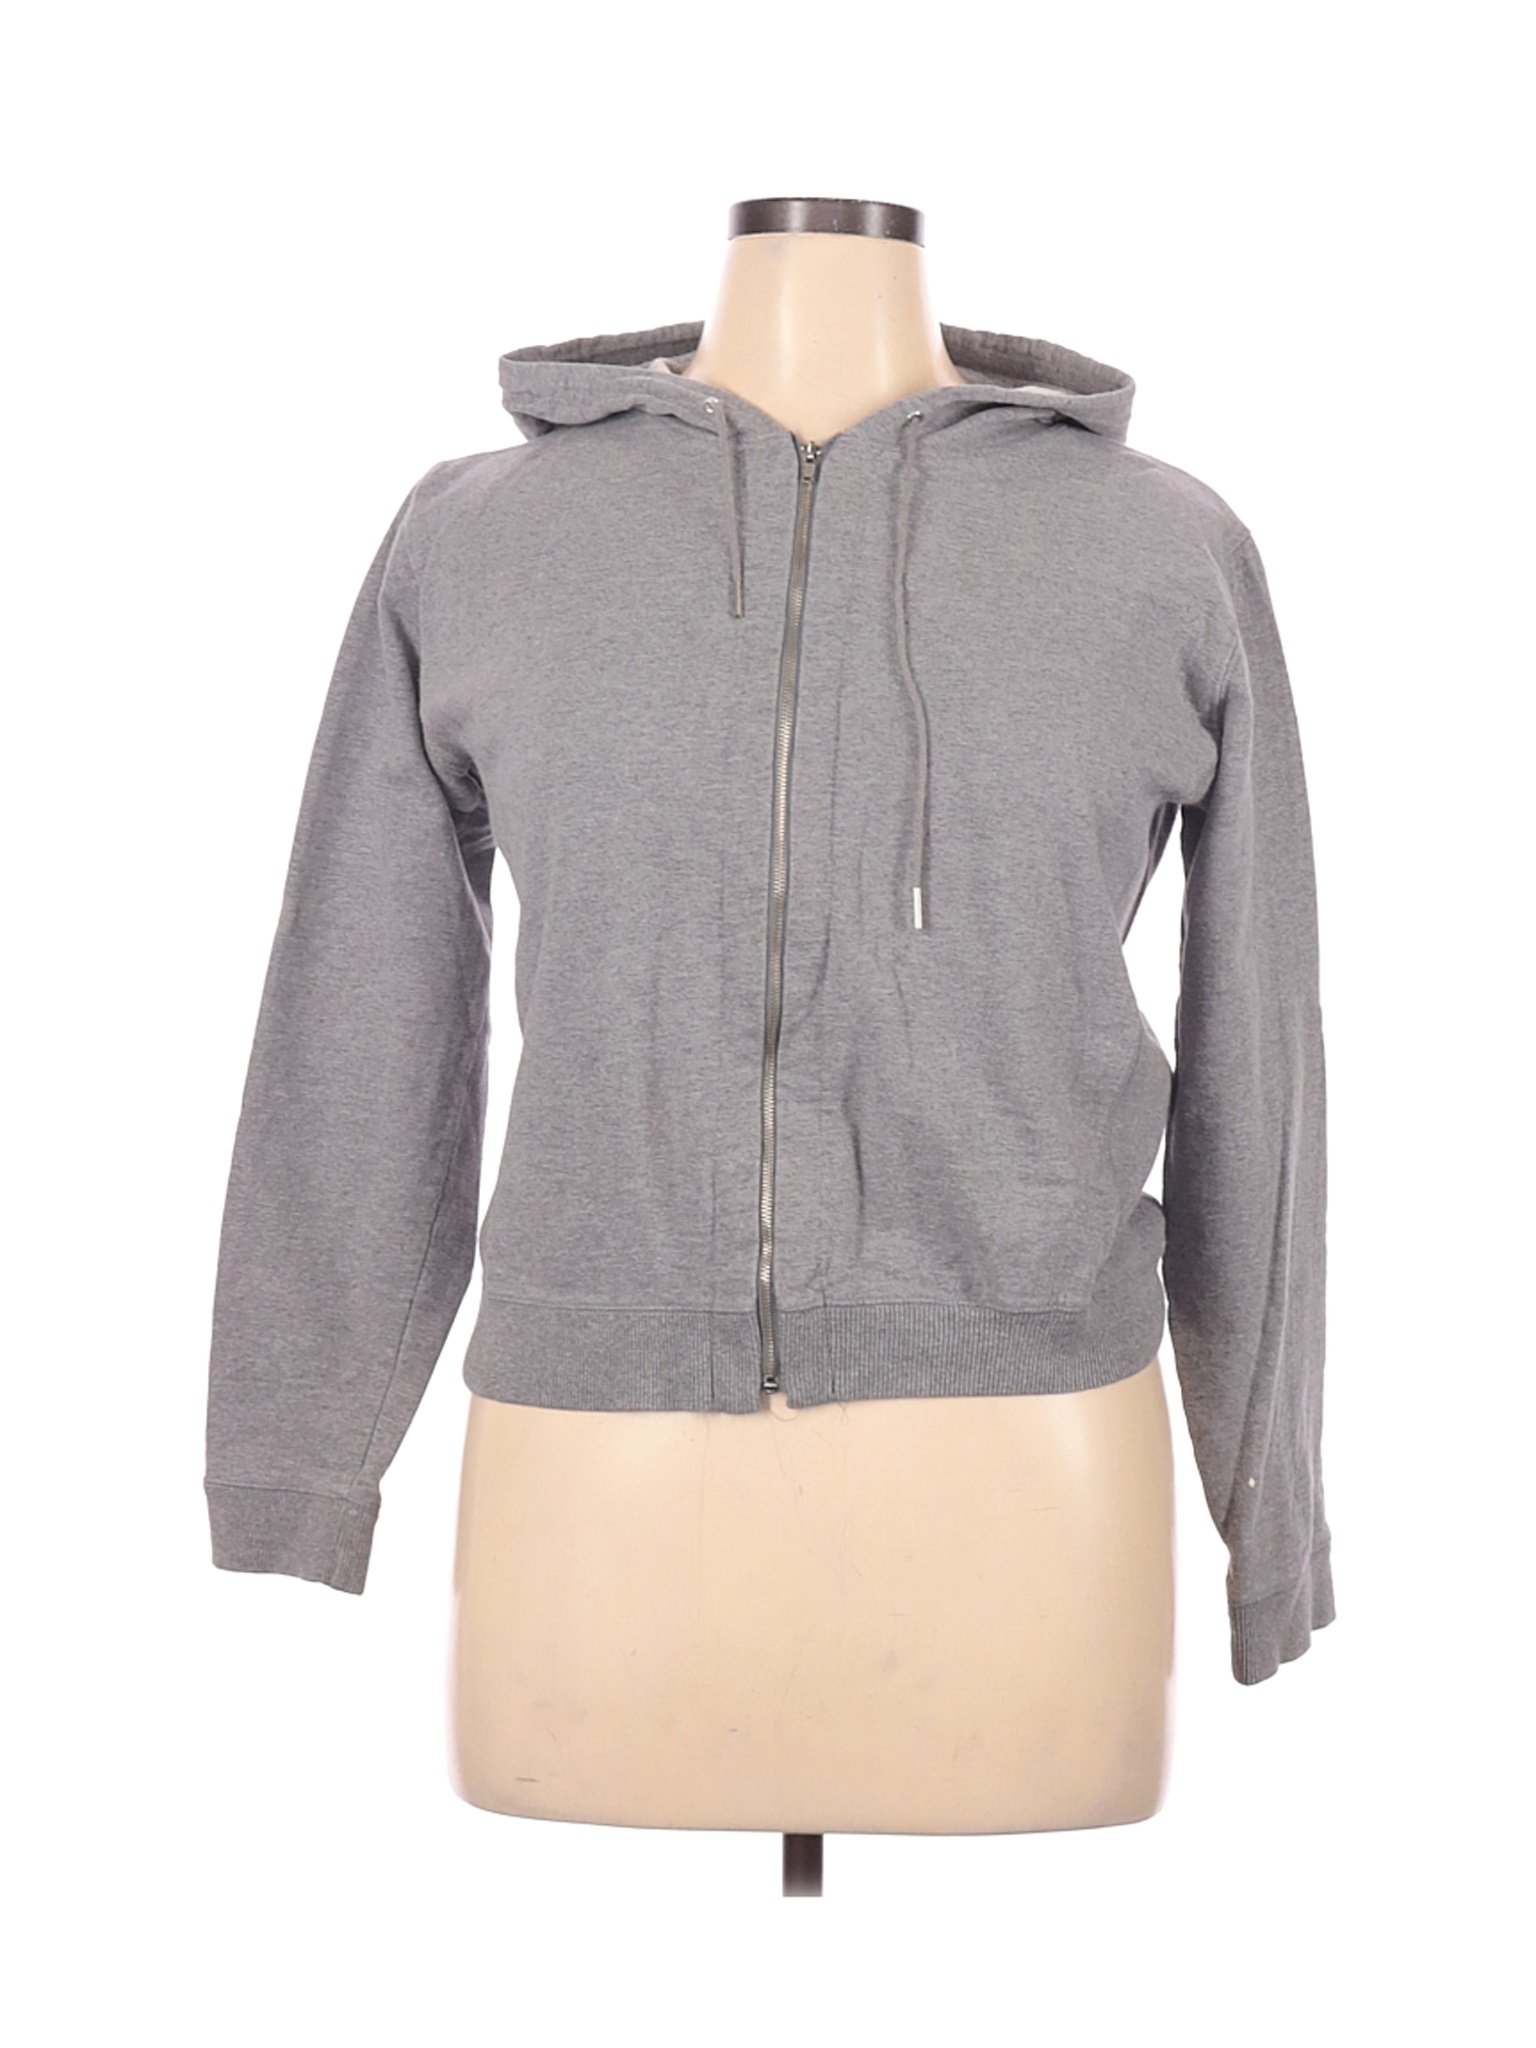 Danskin Women Gray Zip Up Hoodie XL | eBay